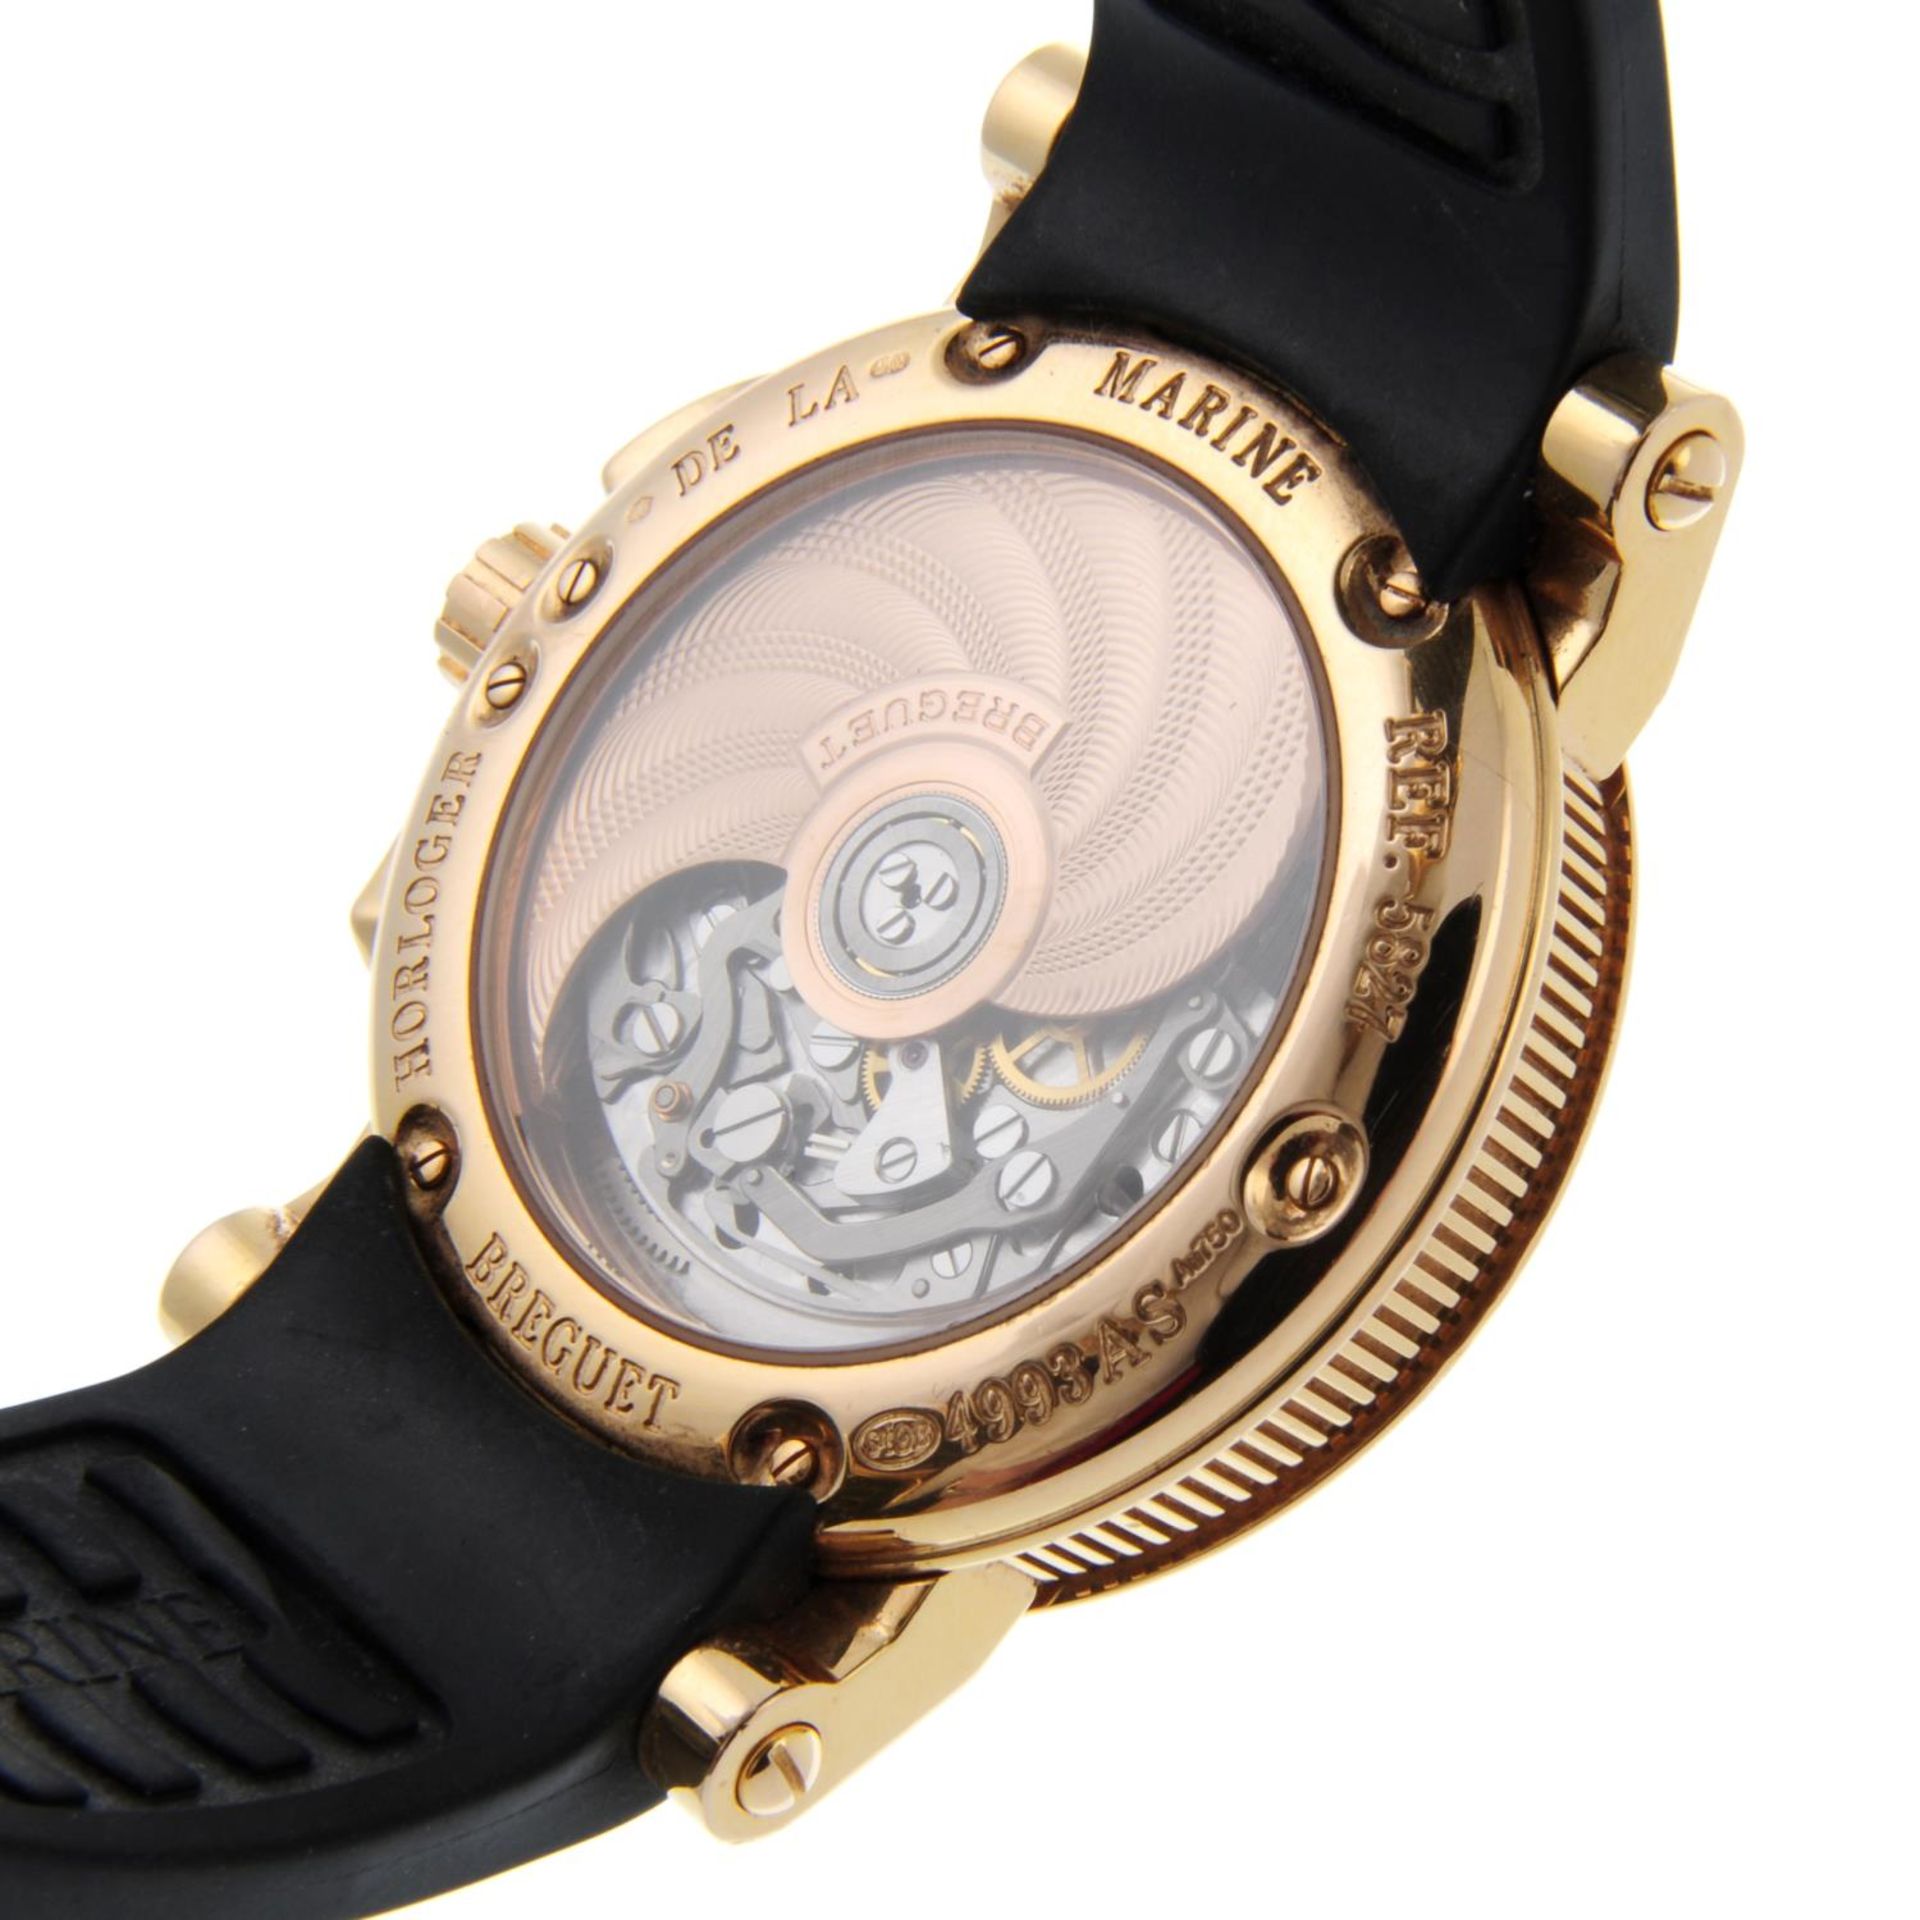 BREGUET - a gentleman's Marine chronograph wrist watch. - Image 4 of 5